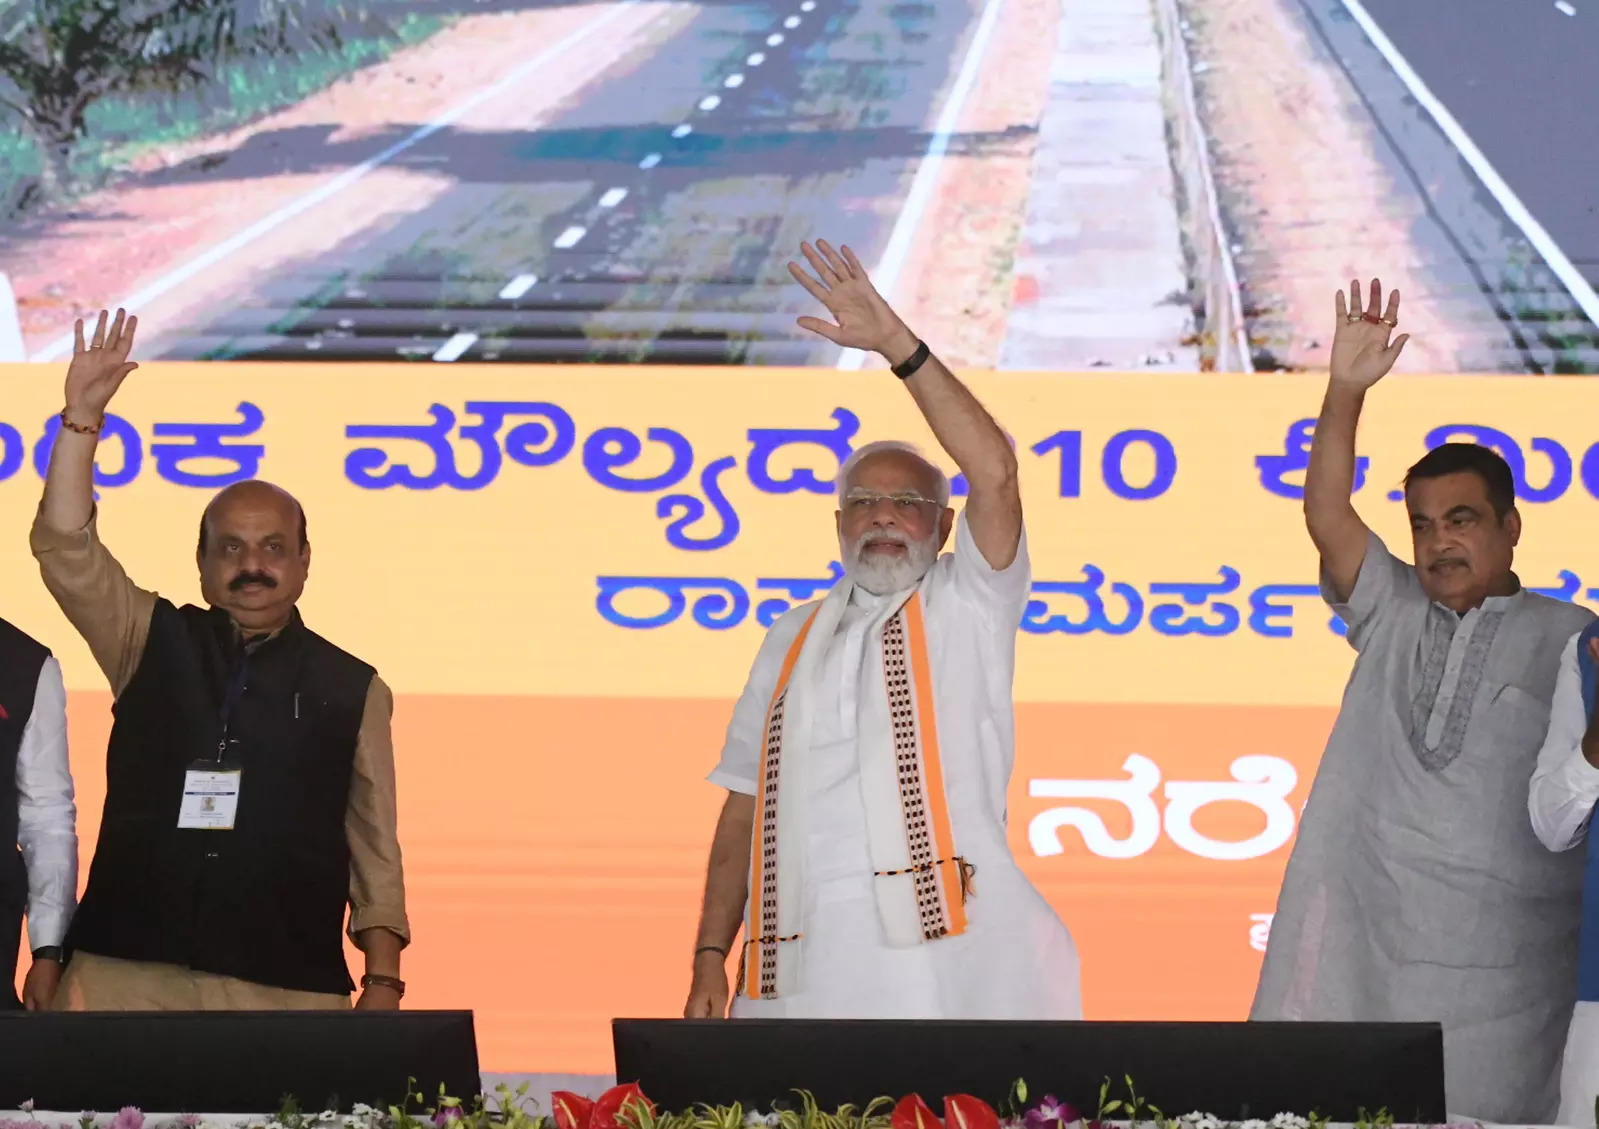  Prime Minister Narendra Modi with Union Minister for Road Transport & Highways Nitin Gadkari and Karnataka Chief Minister Basavaraj Bommai during the inauguration of the Bengaluru-Mysuru Expressway project in Mandya district. (PTI Photo)